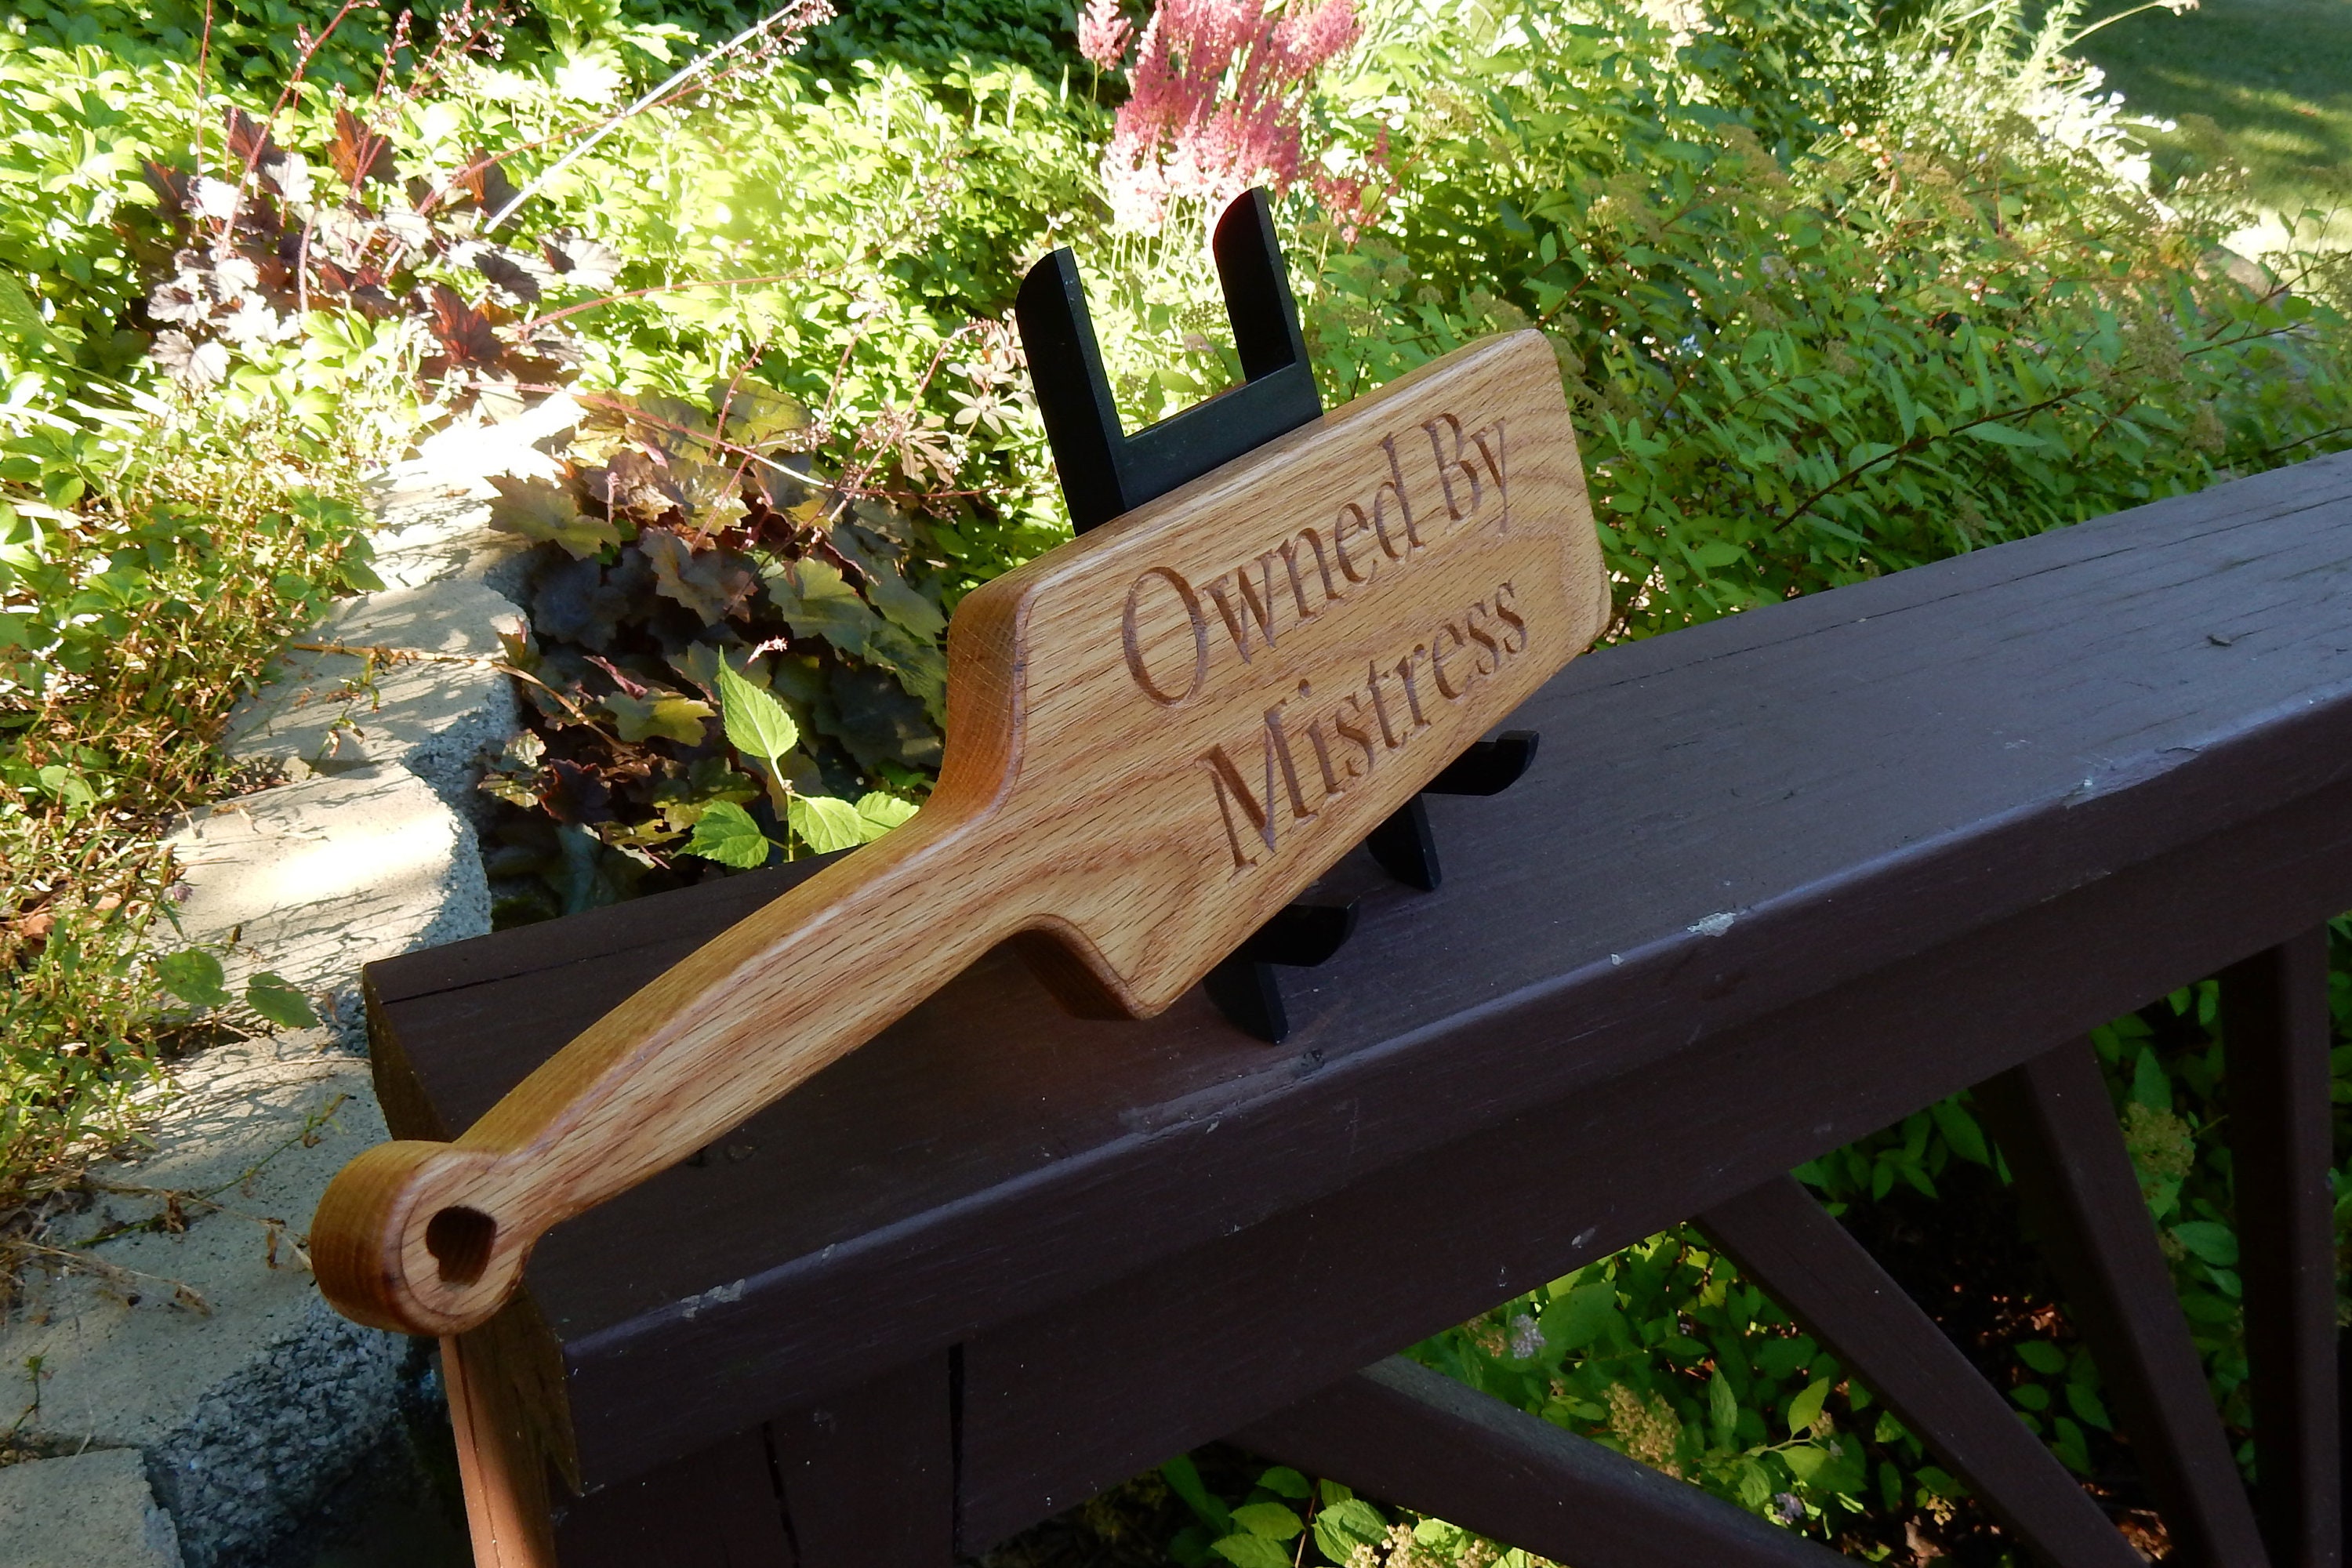 23 Long - Wide Wooden Spanking Paddle – Master Control's Woodshop